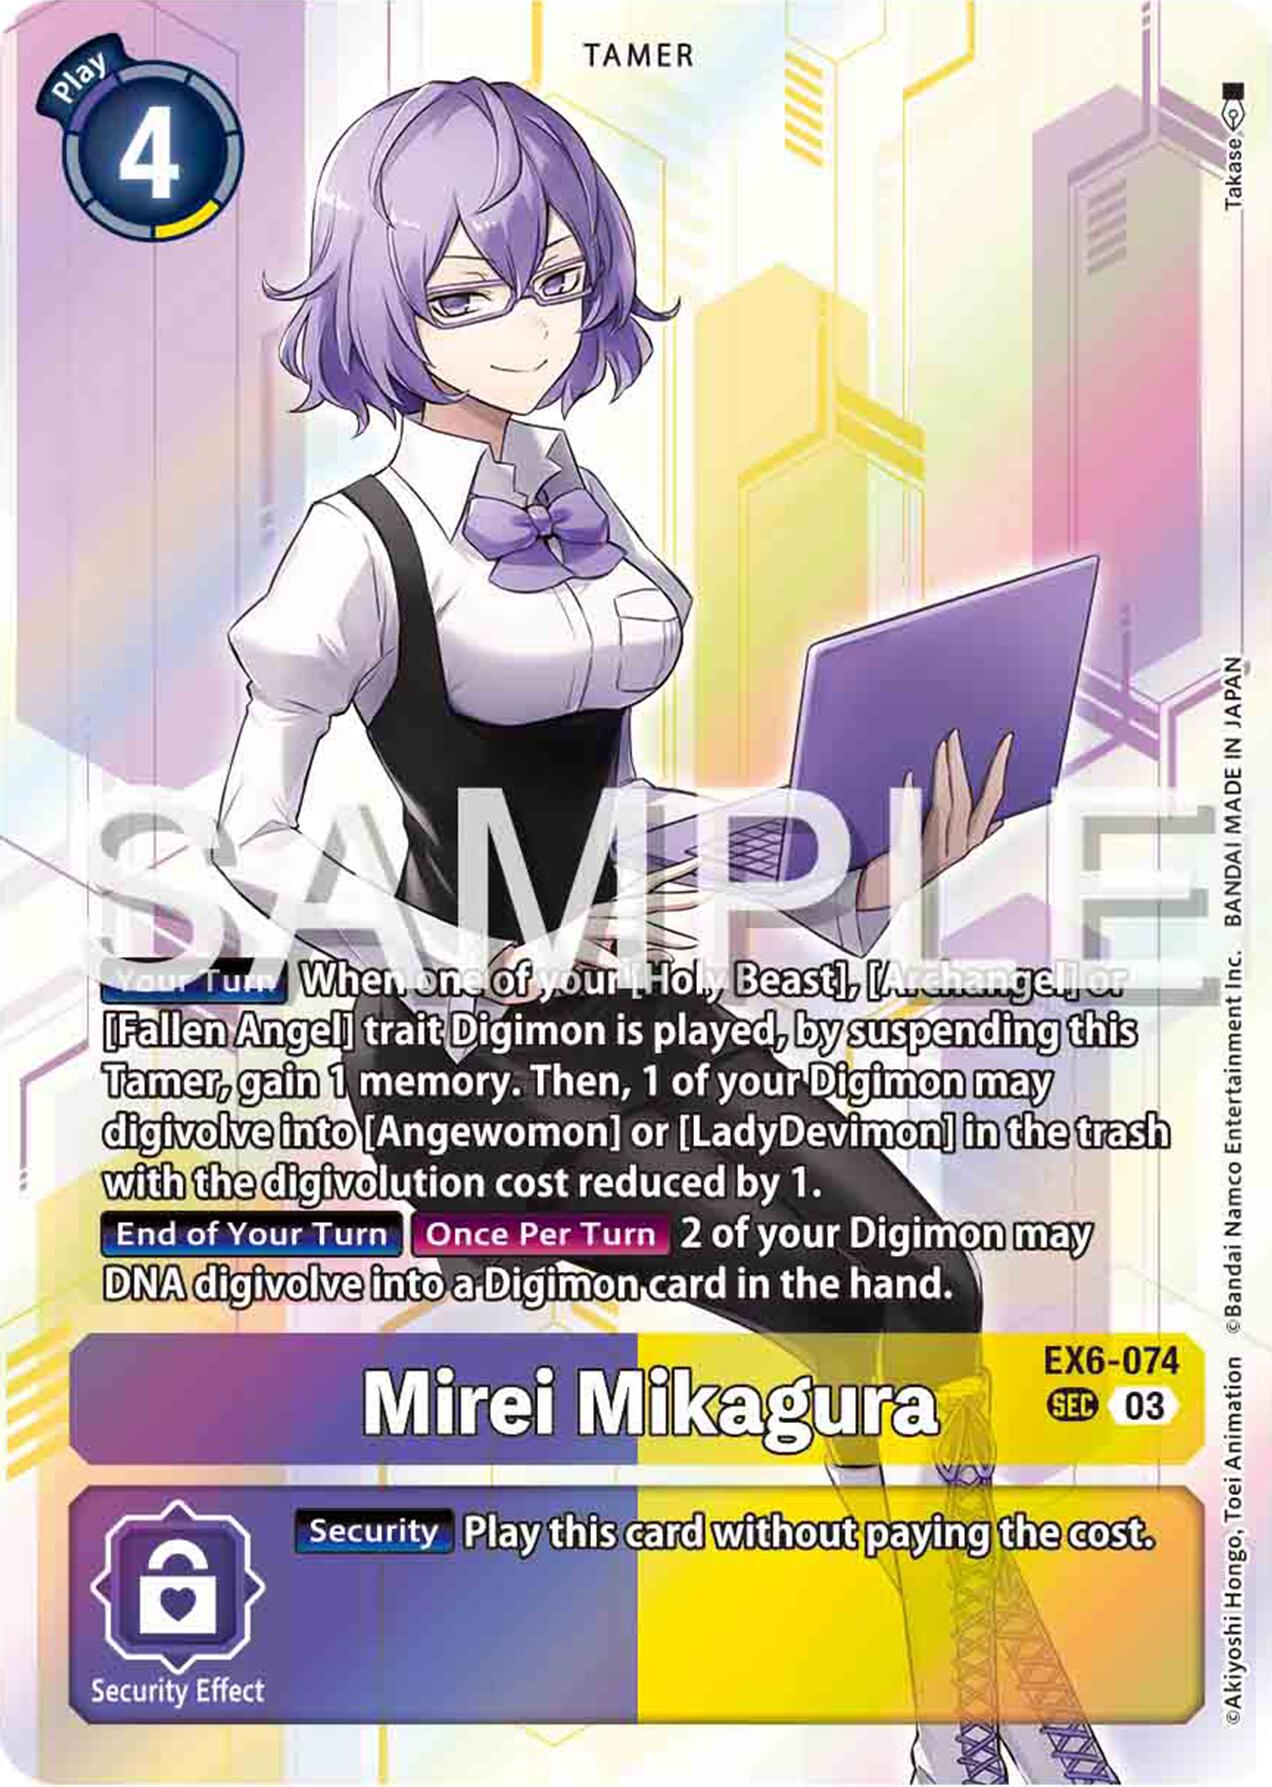 Mirei Mikagura [EX6-074] [Infernal Ascension] | Red Riot Games CA